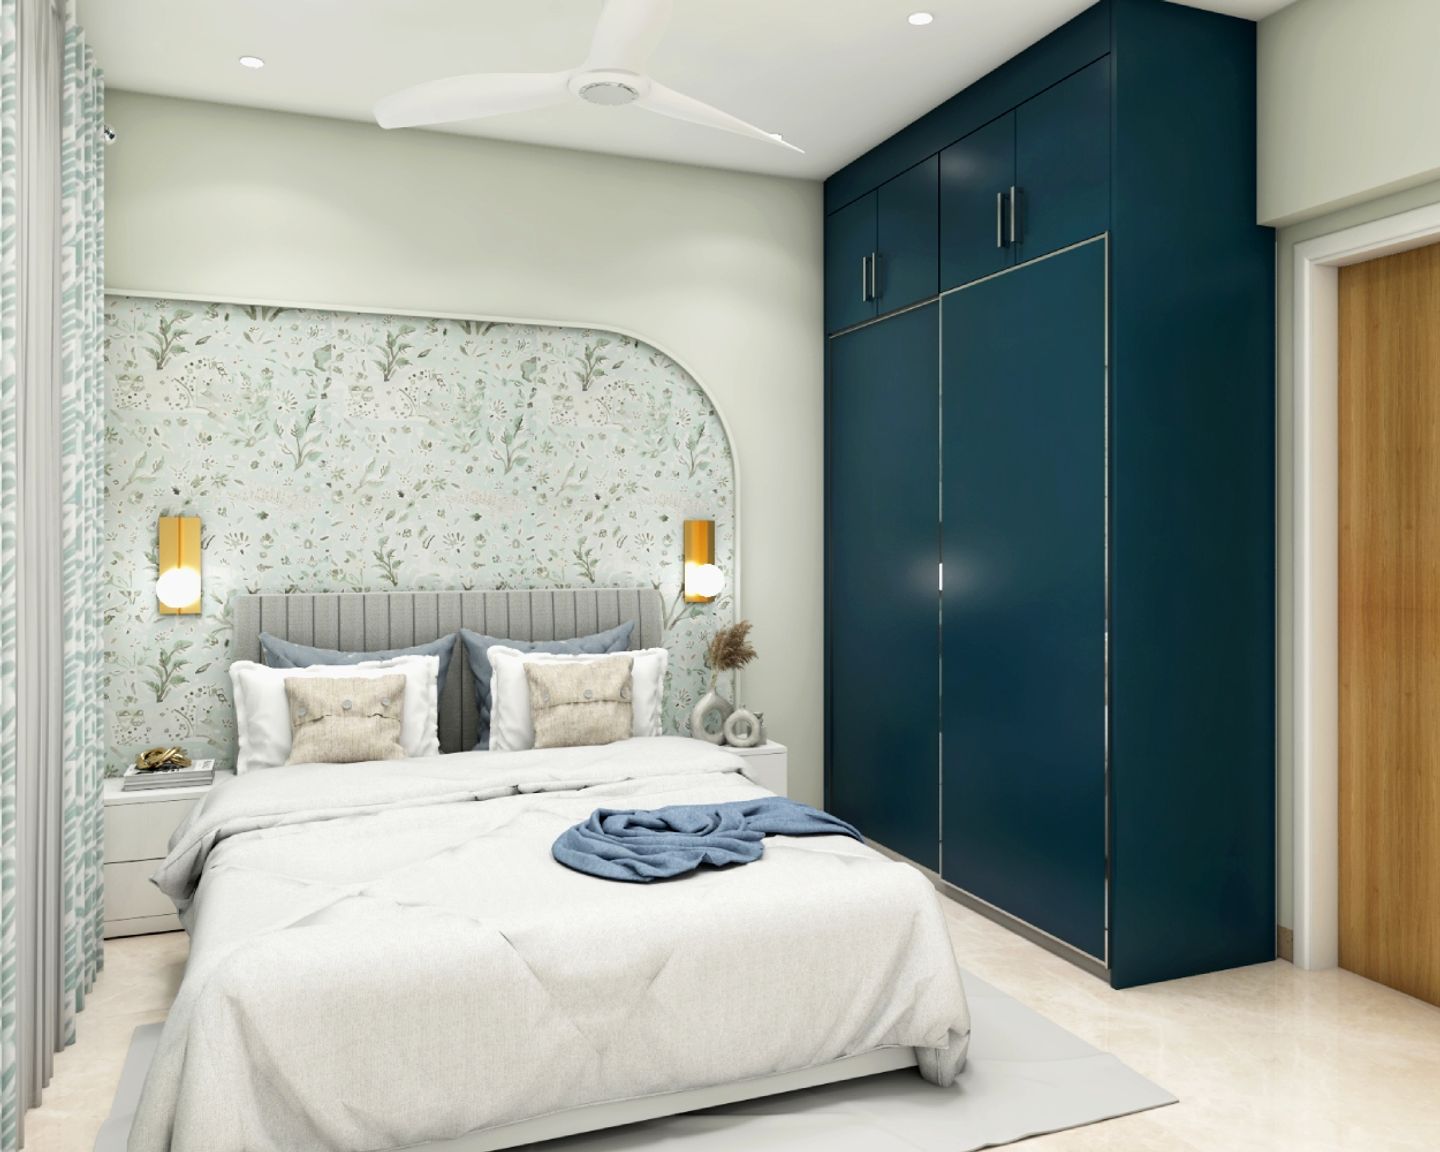 Guest Room Design With 2-Door Teal Blue Sliding Wardrobe - Livspace